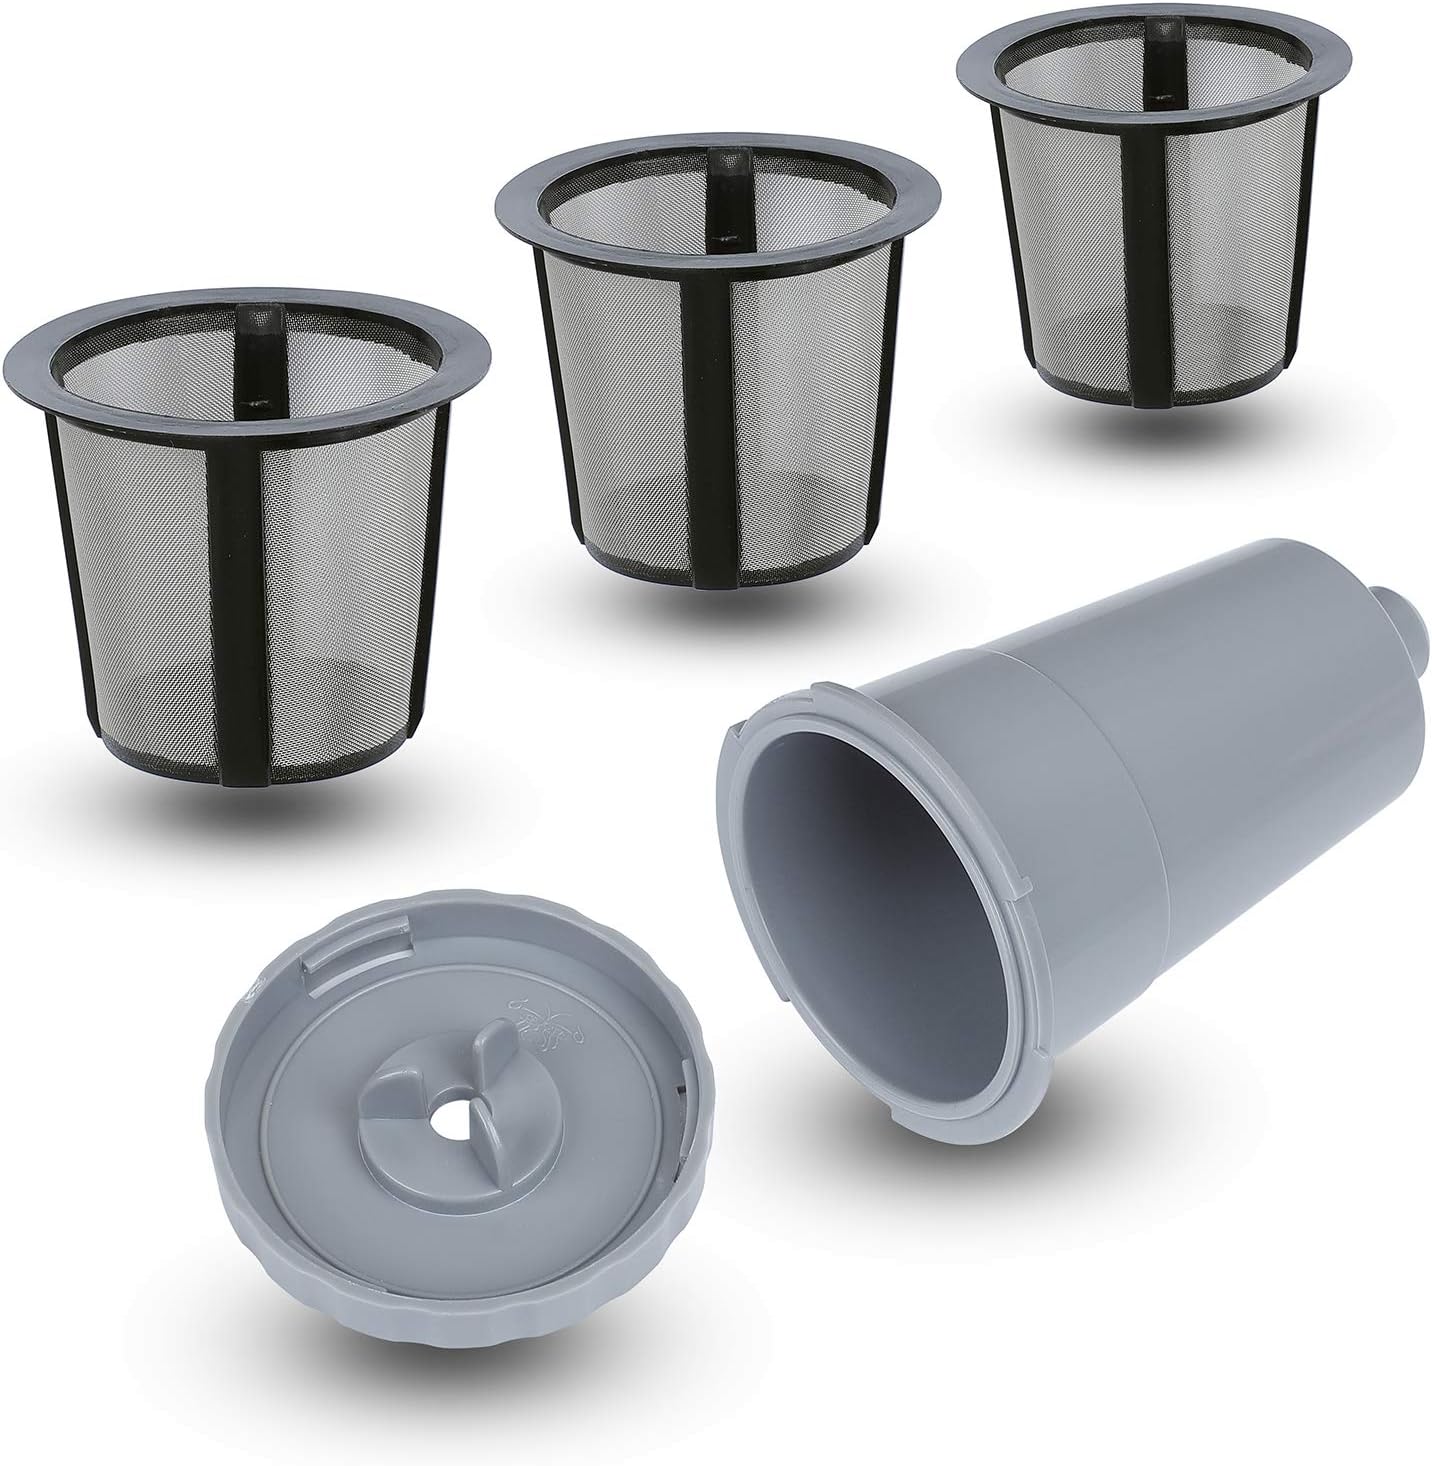 Reusable K Cup for Keuring,BPA-Free Reusable Filter Cup Compatible with B30 B40 B50 B60 B70 K10 MINI Plus K15 K40/45 K55 K60/65 K70/75/79 series 5048 Old Mode Grey